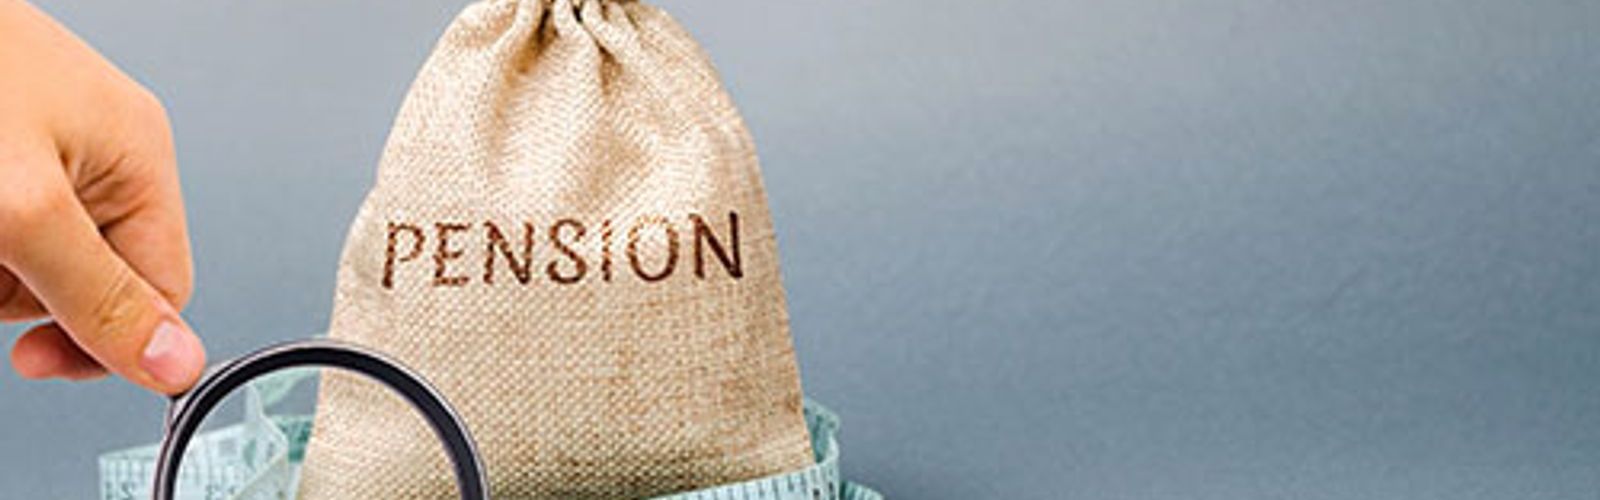 money bag with pension label (bs304715038)_web.jpg